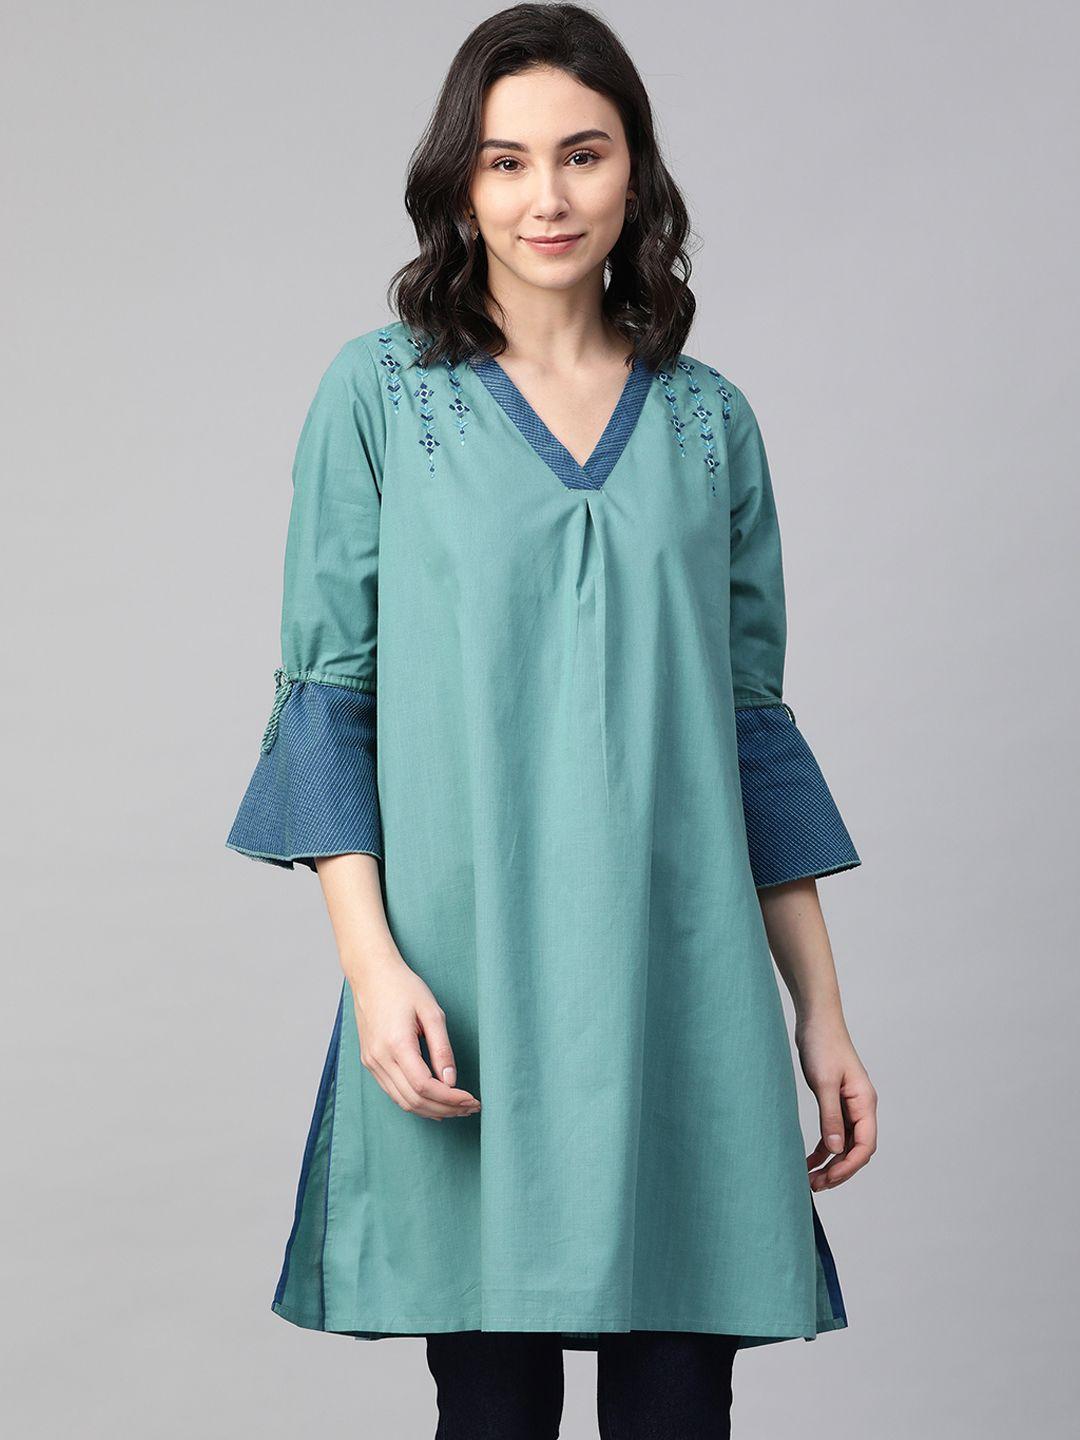 global-desi-women's-green-solid-pure-cotton-tunic